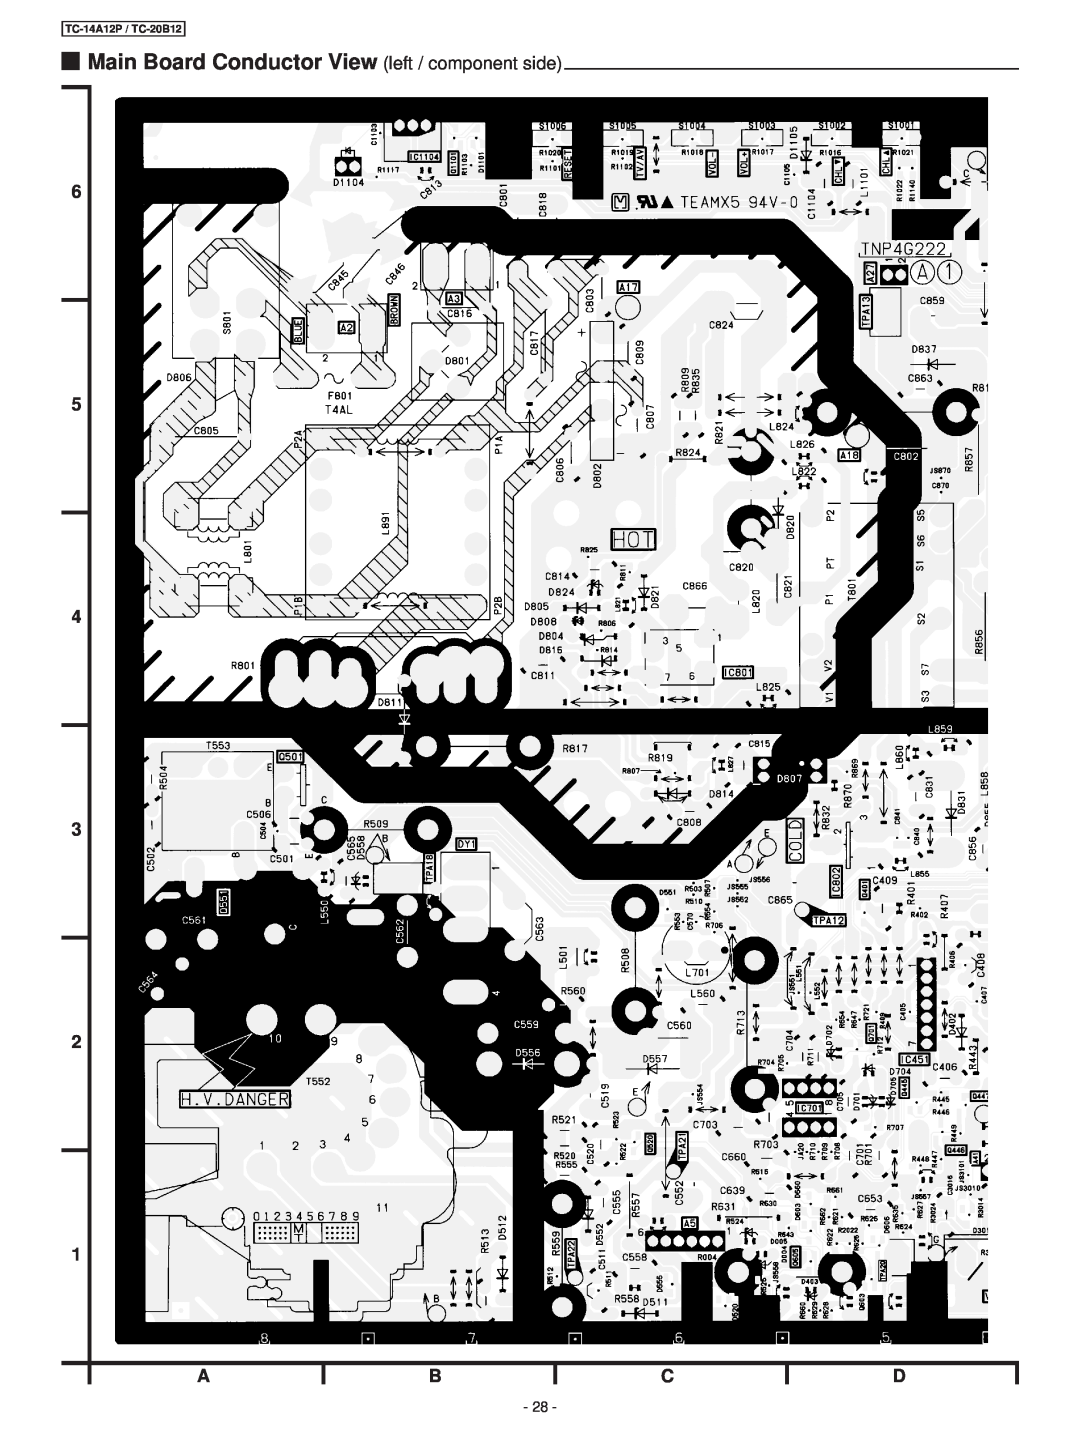 Panasonic service manual Main Board Conductor View left / component side, TC-14A12P / TC-20B12 